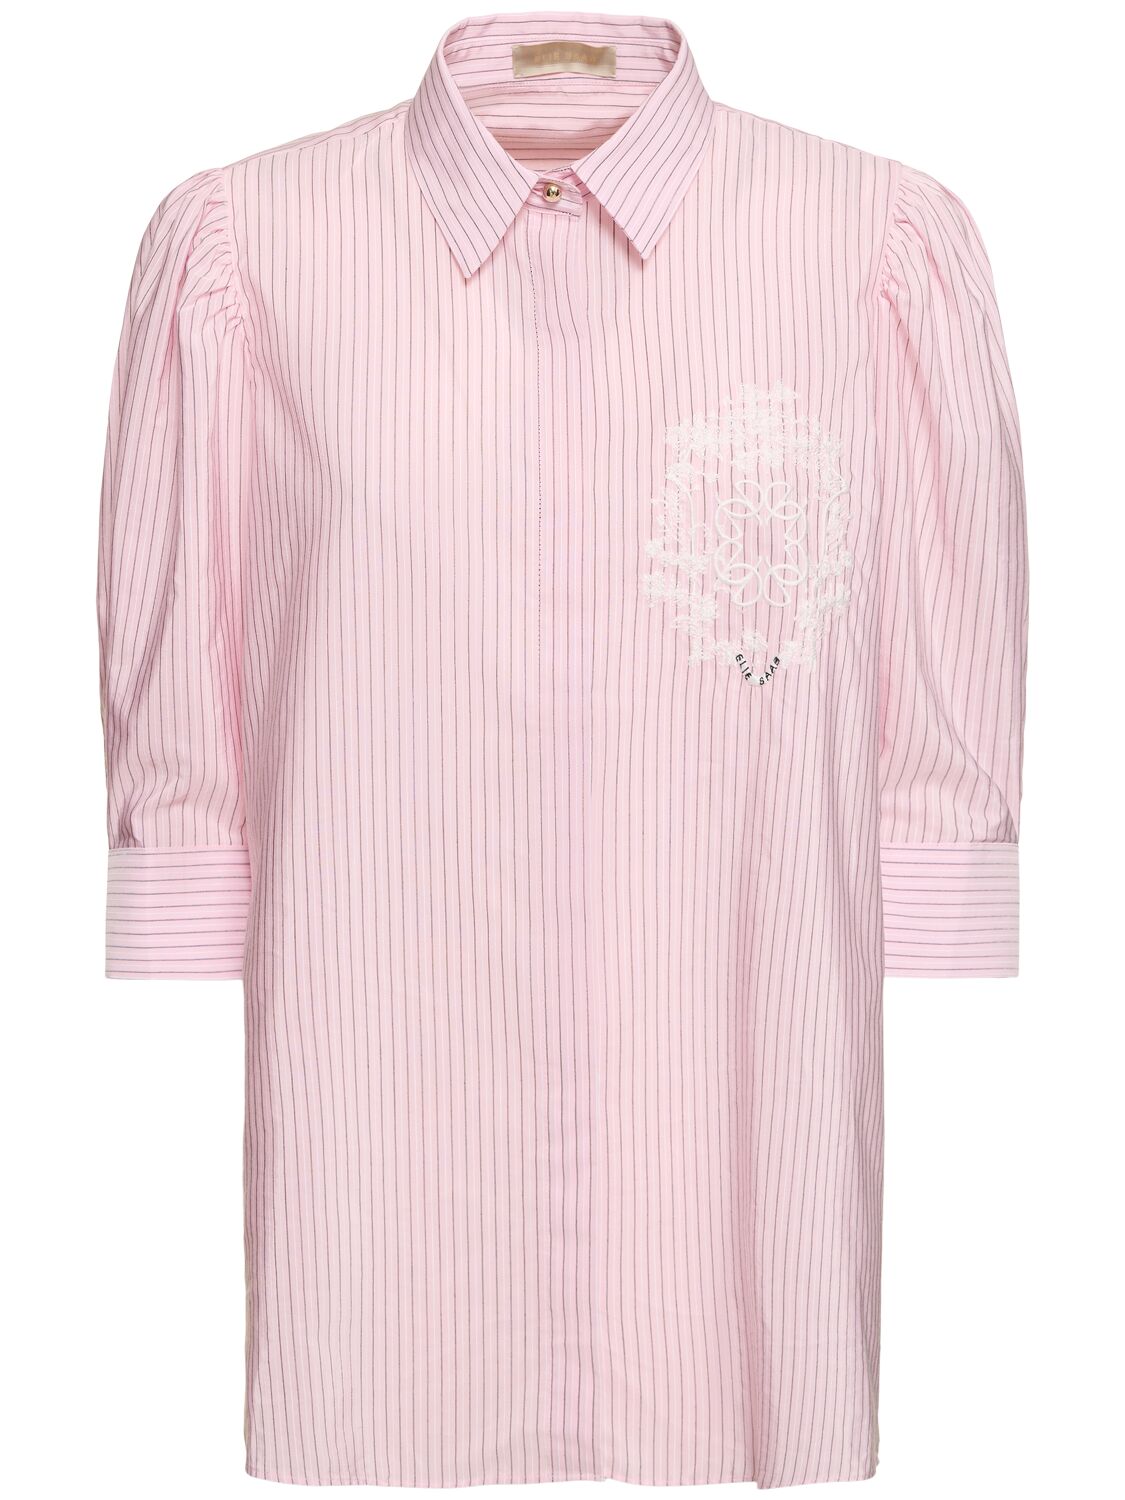 Image of Striped Poplin Shirt